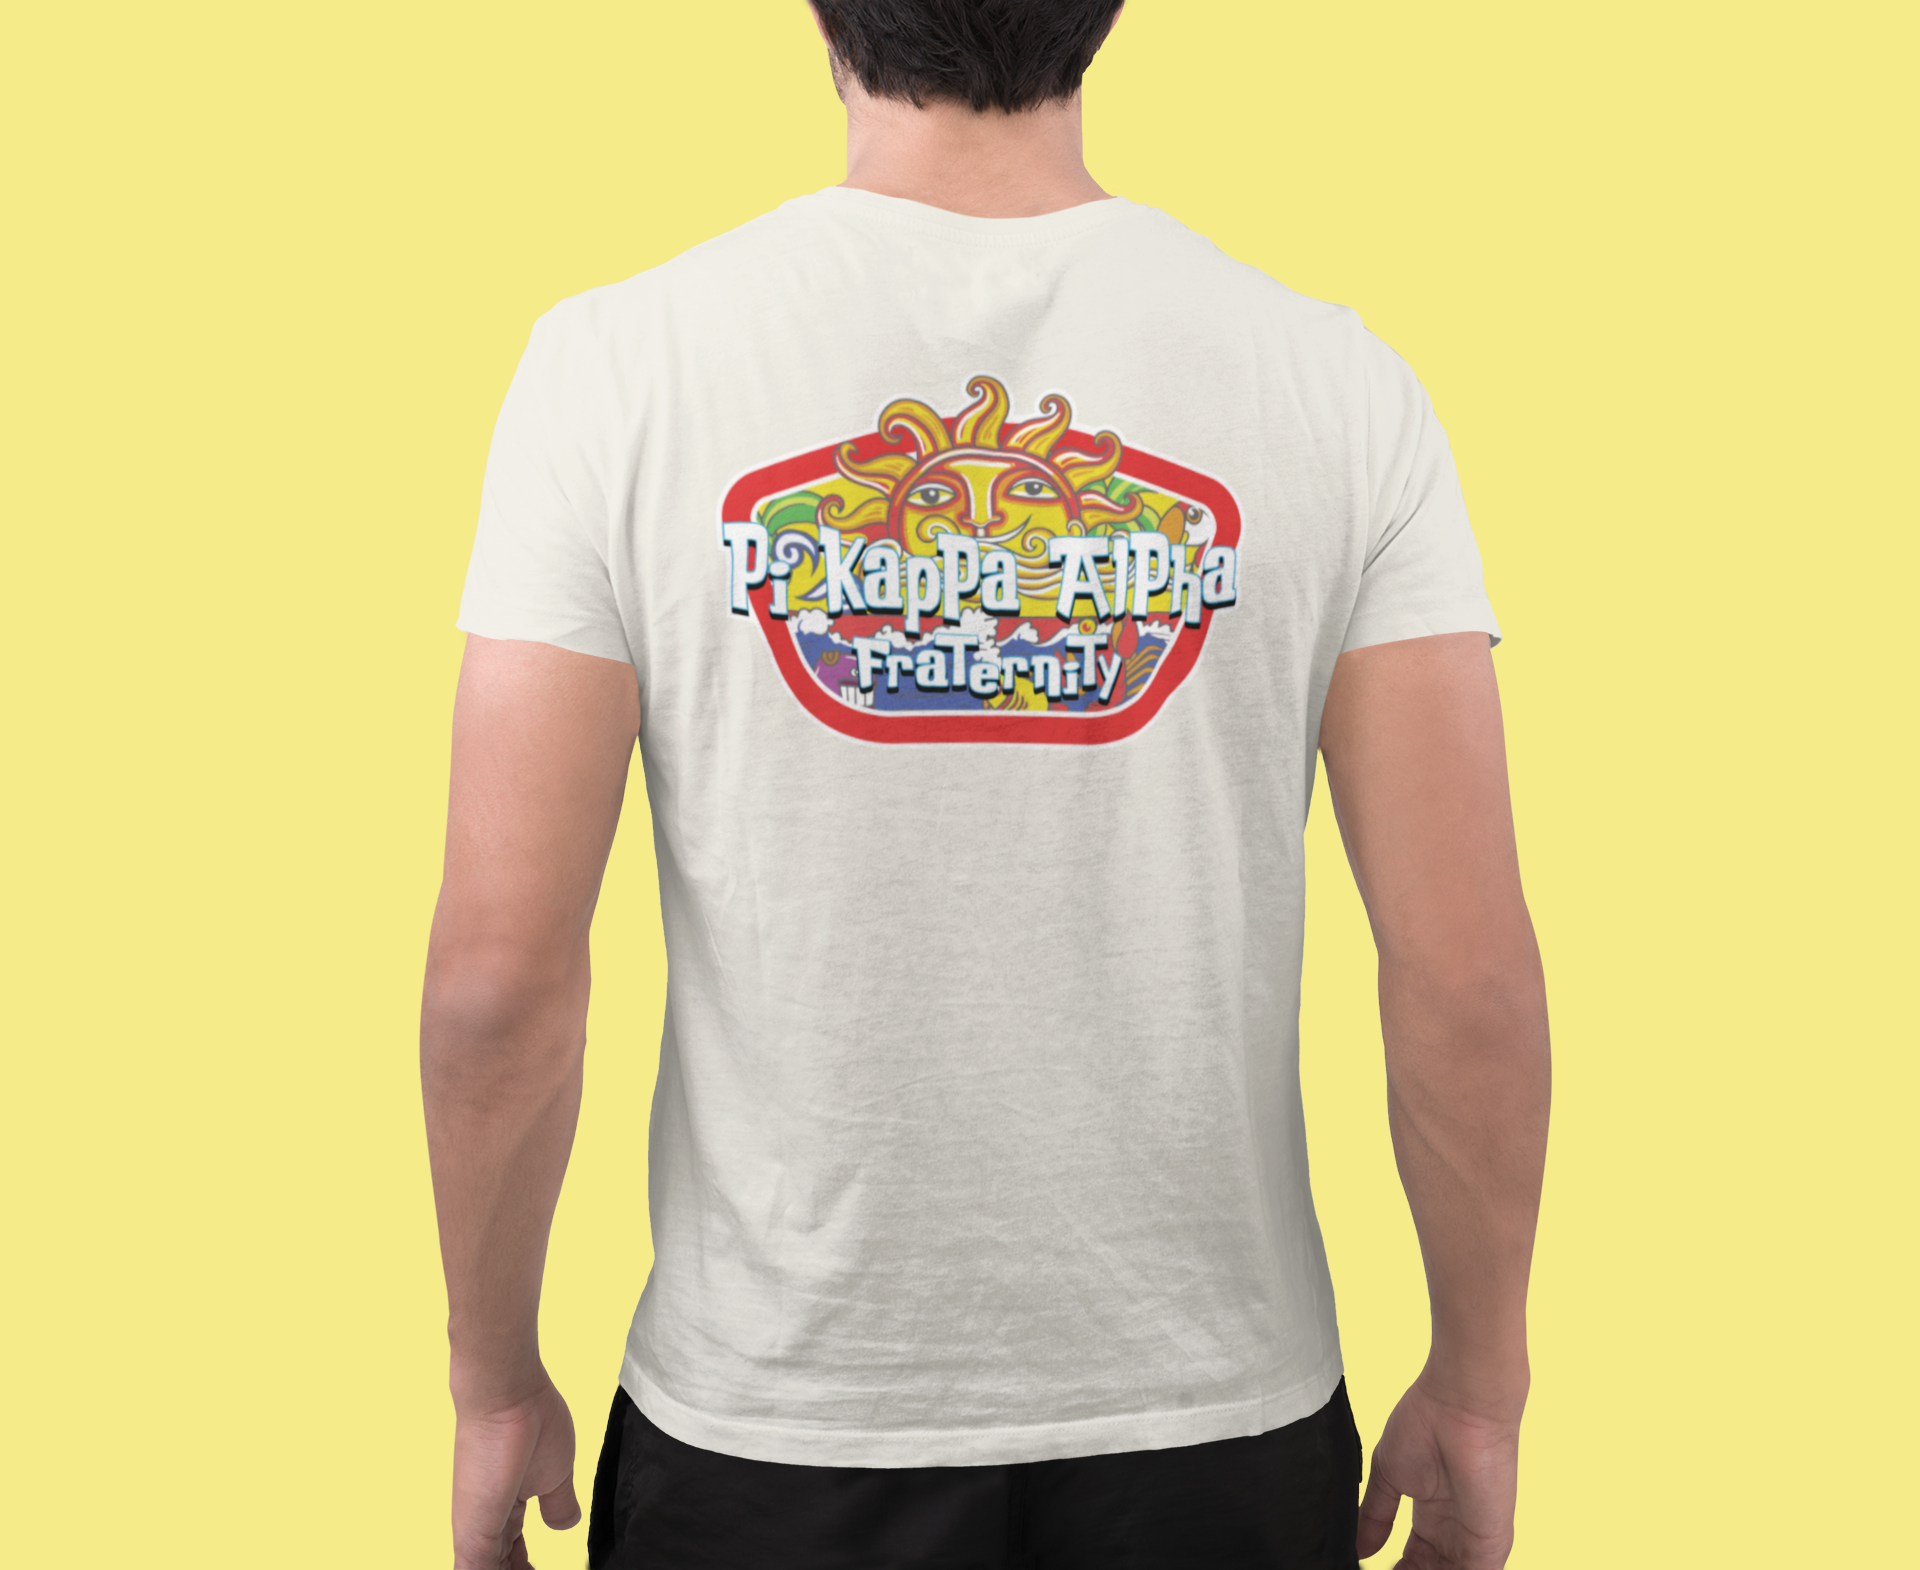 White Pi Kappa Alpha Graphic T-Shirt | Summer Sol | Pi kappa alpha fraternity shirt model 